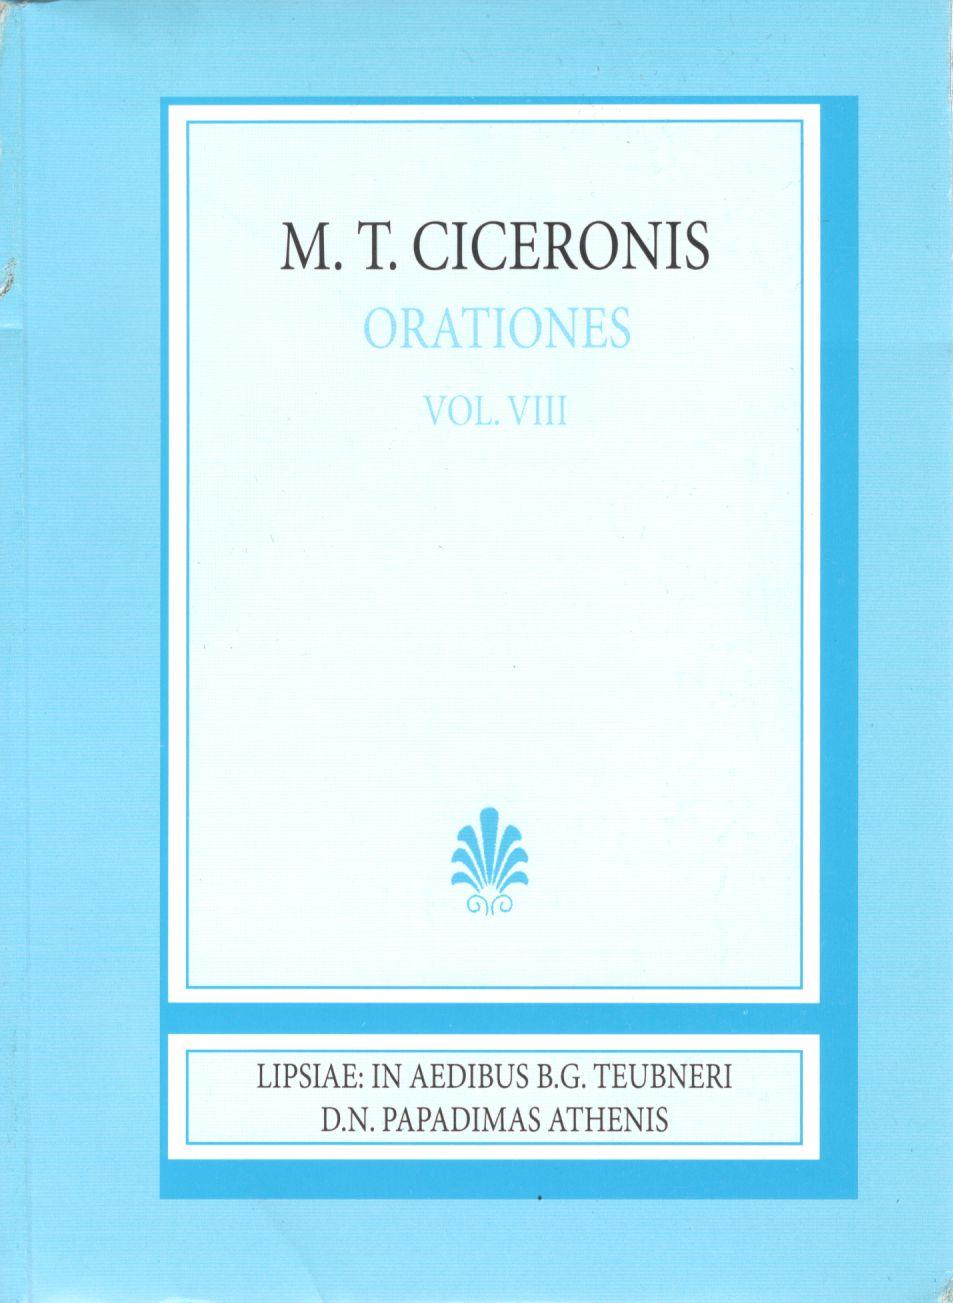 M. T. Ciceronis, Orationes & Fragmenta Oratorium, Vol. VIII [Μάρκου Τύλλιου Κικέρωνος, Λόγοι, τ. Η